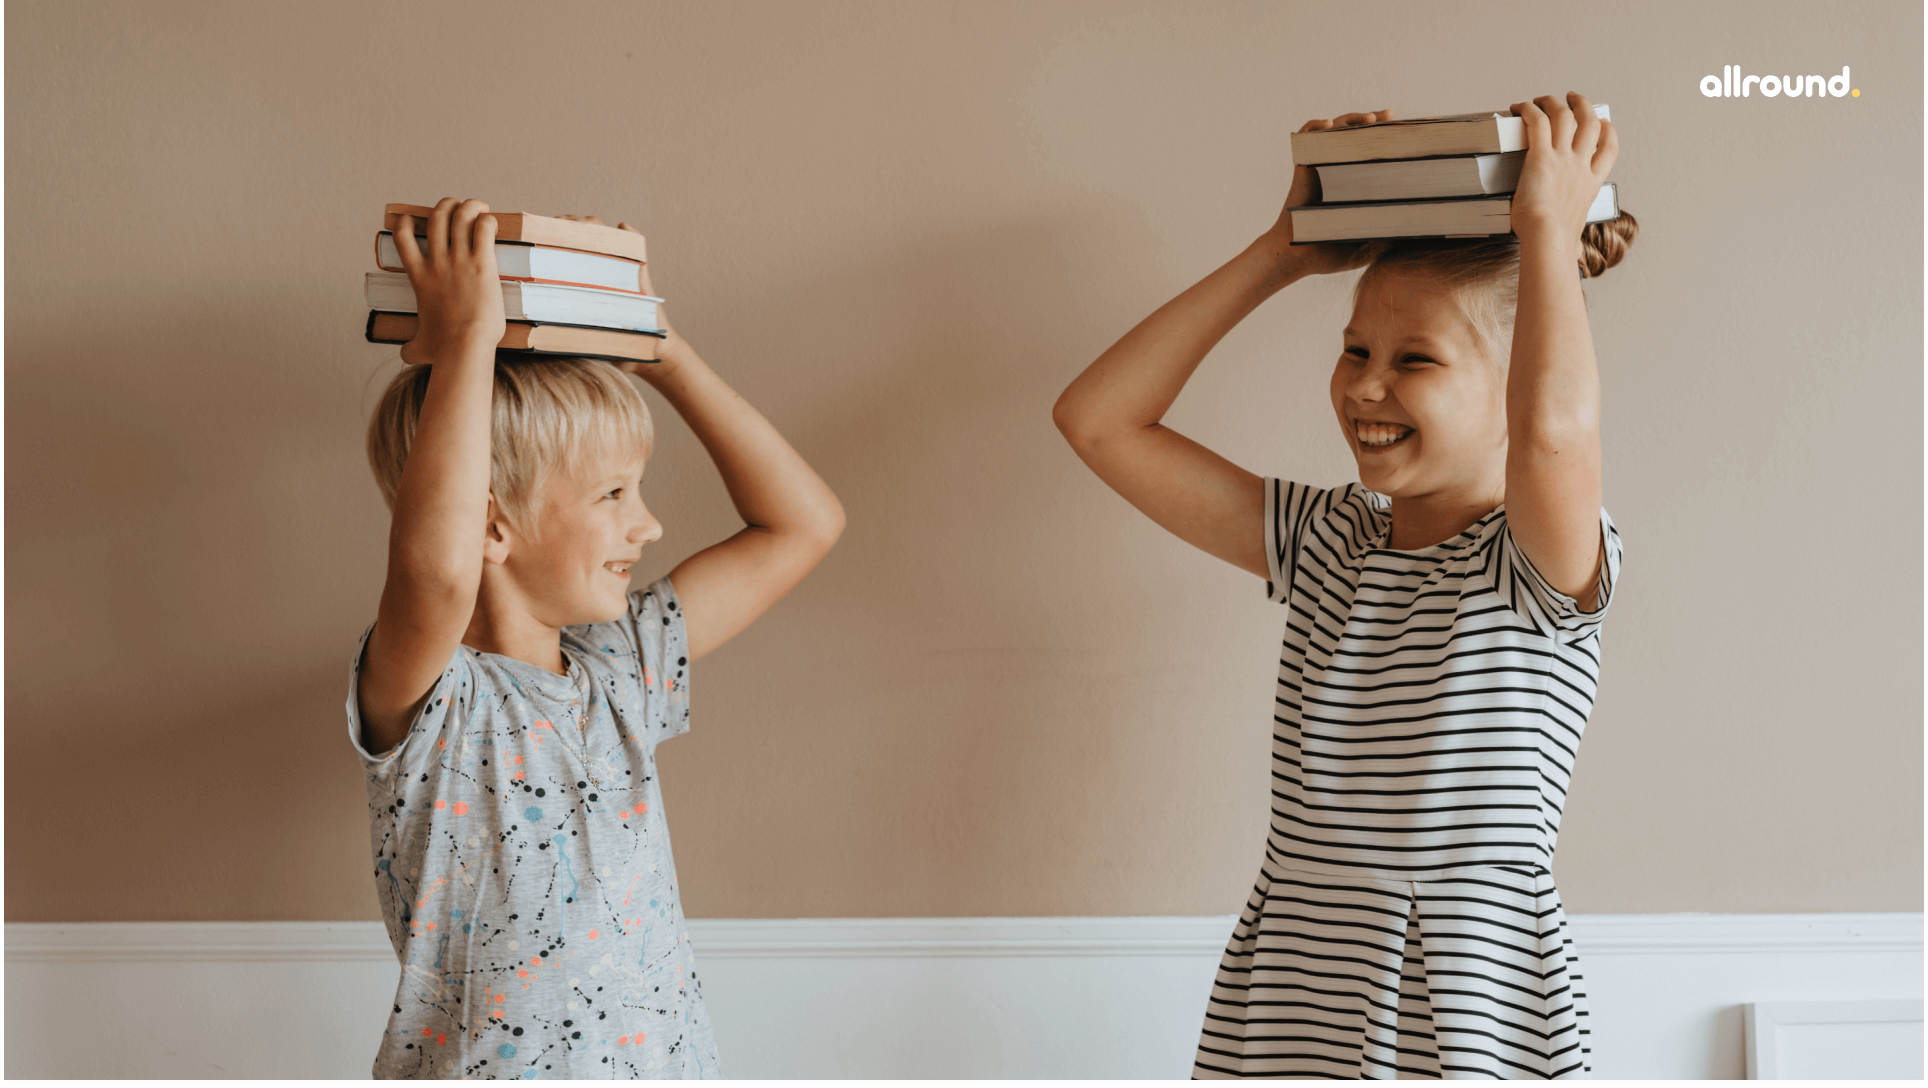 sibling relationships in homeschooling